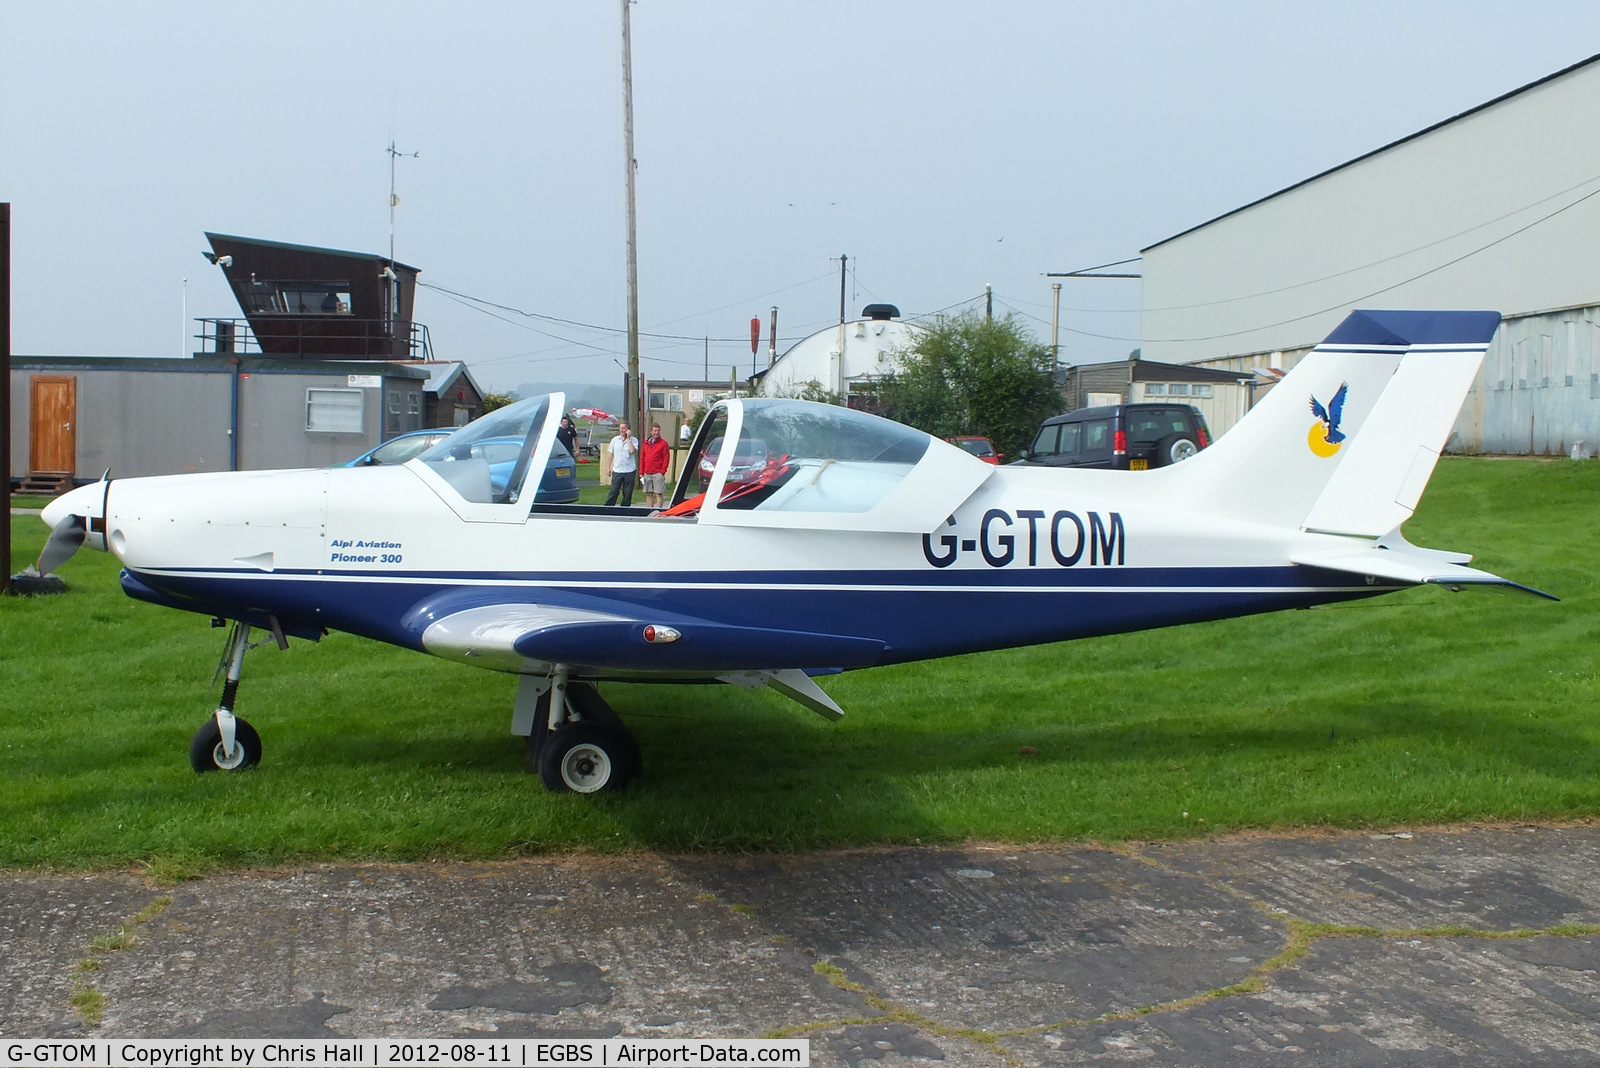 G-GTOM, 2008 Alpi Aviation Pioneer 300 C/N LAA 330-14795, at Shobdon Airfield, Herefordshire